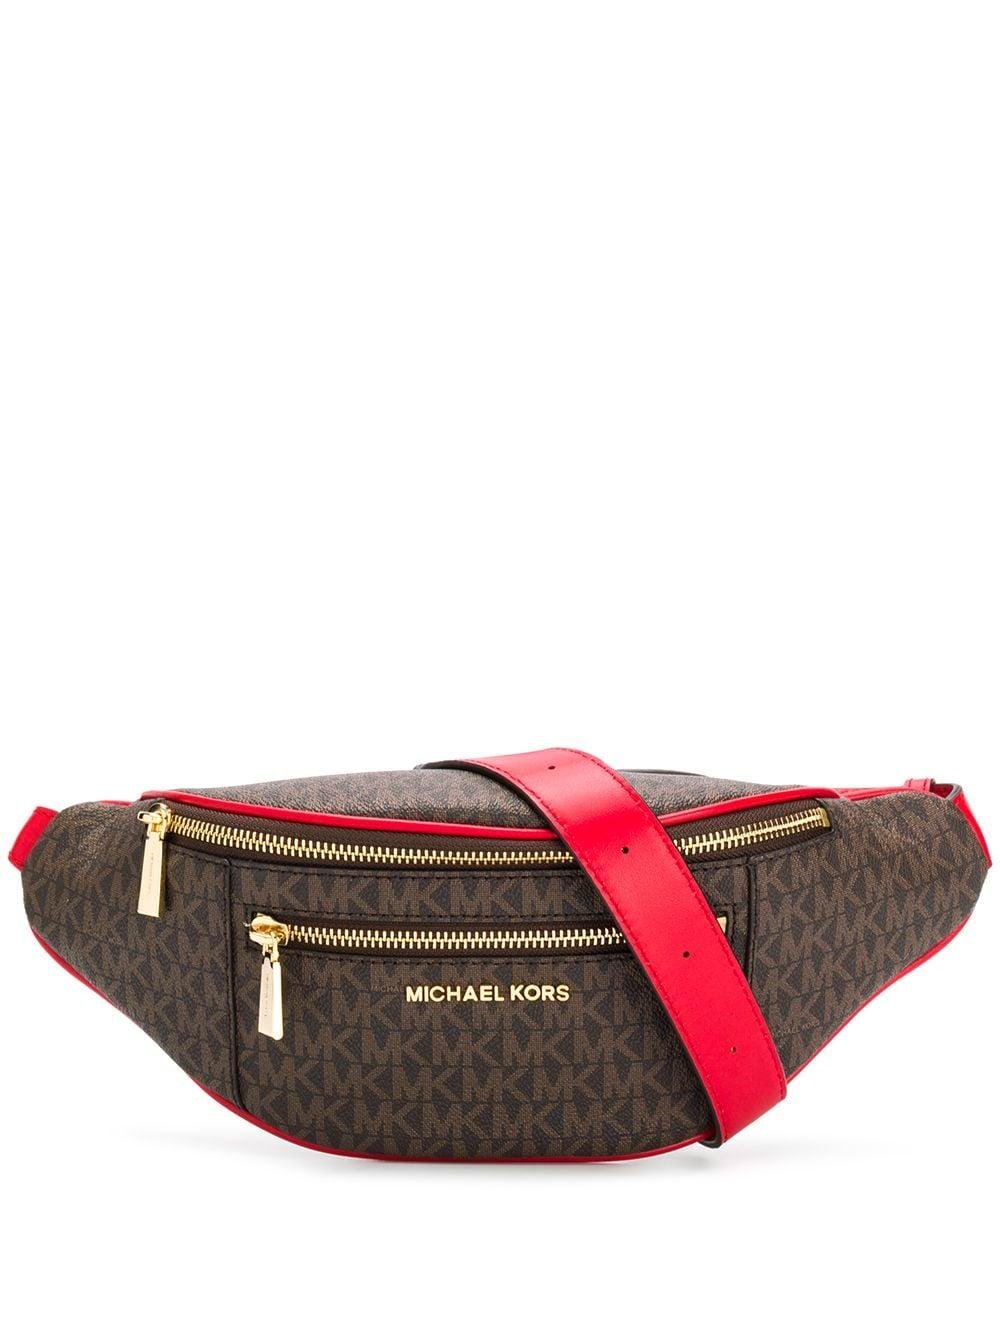 Visiter la boutique Michael KorsMichael Kors Women's Belt Bag Small/Medium Brown/Pink 